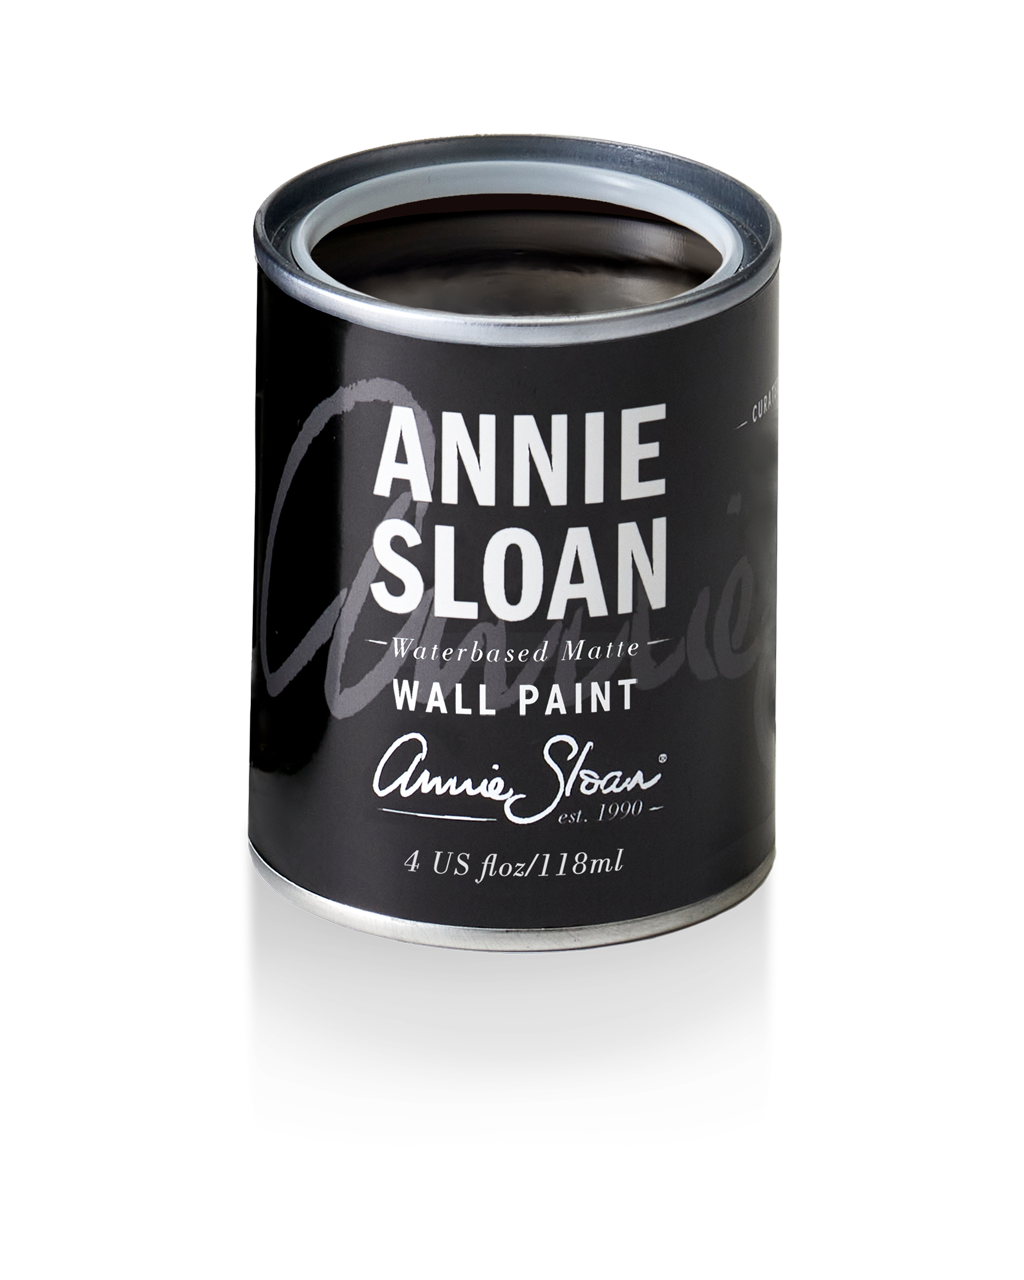 Annie Sloan Wall Paint Tin in Athenian Black